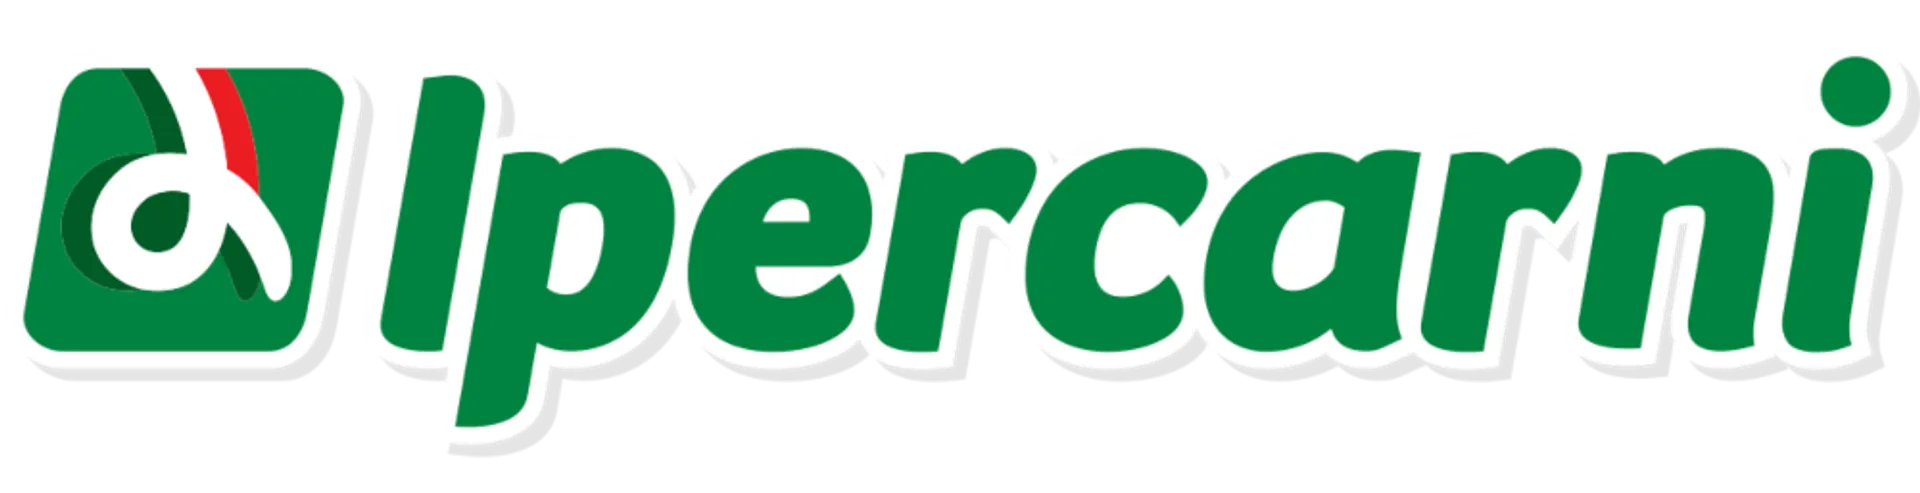 IPERCARNI logo